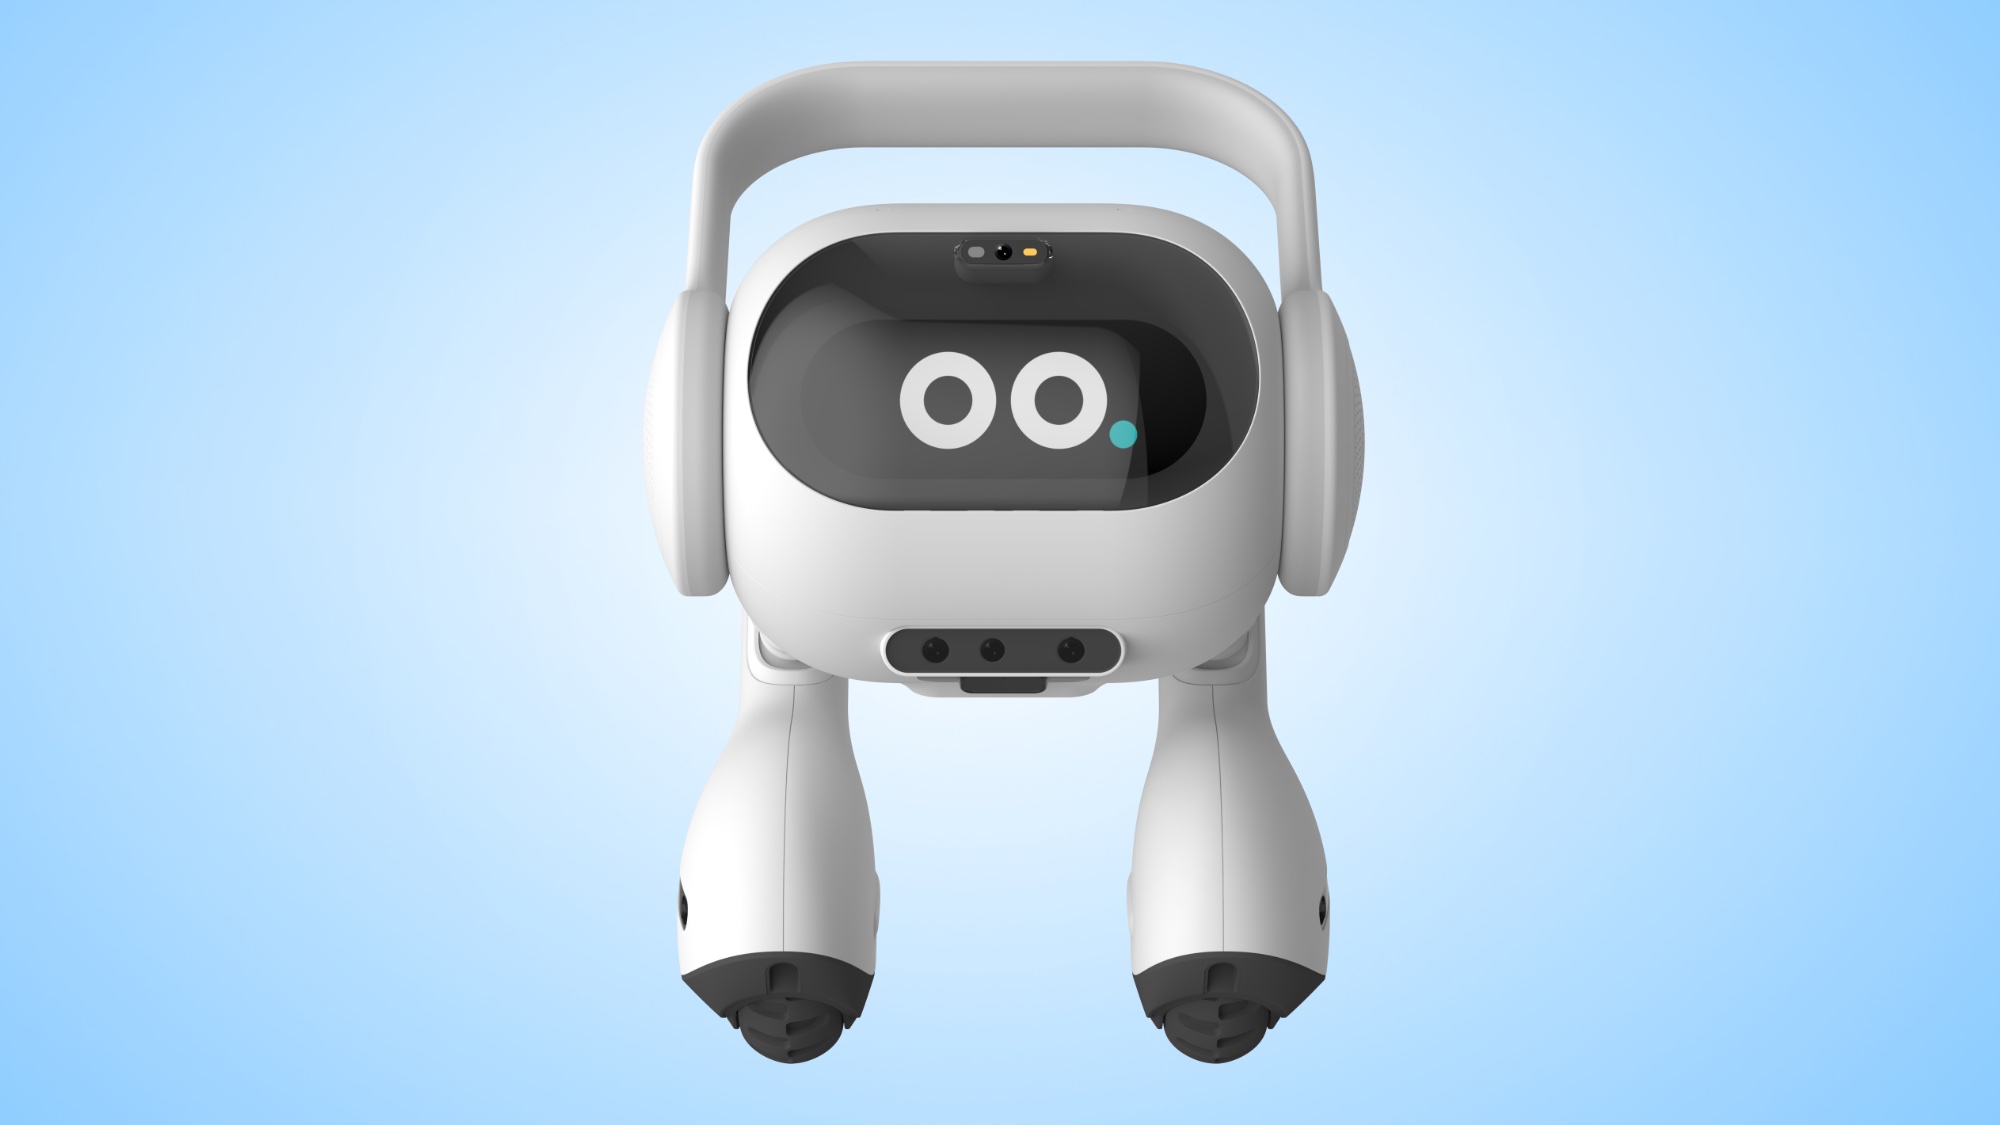 Robot agente de IA para el hogar inteligente de LG